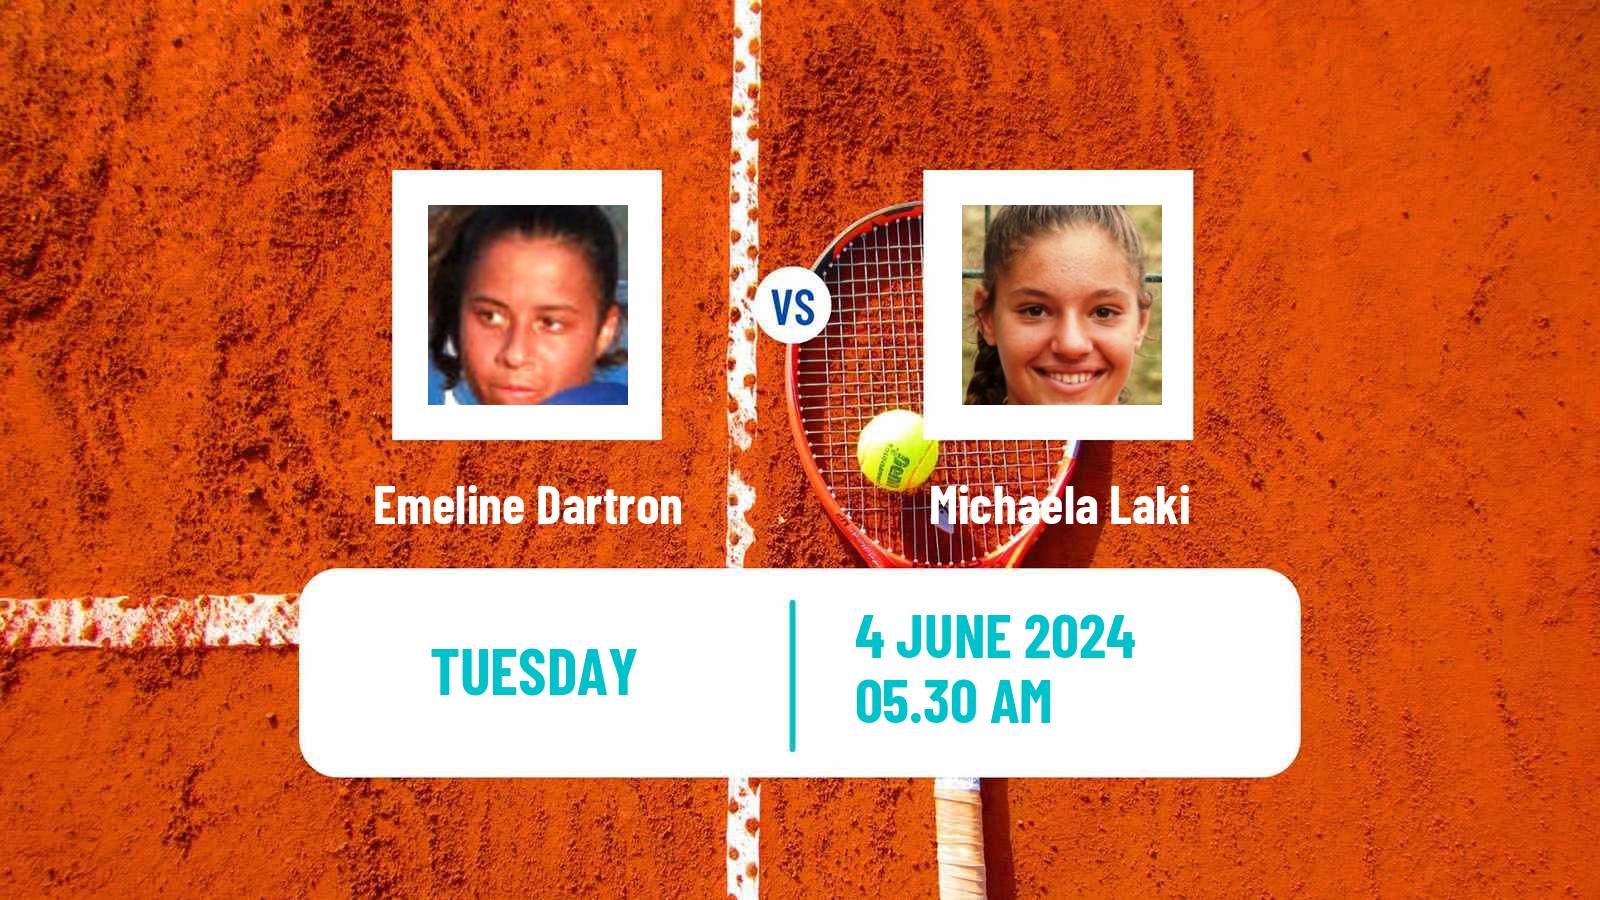 Tennis ITF W35 Kursumlijska Banja 2 Women 2024 Emeline Dartron - Michaela Laki